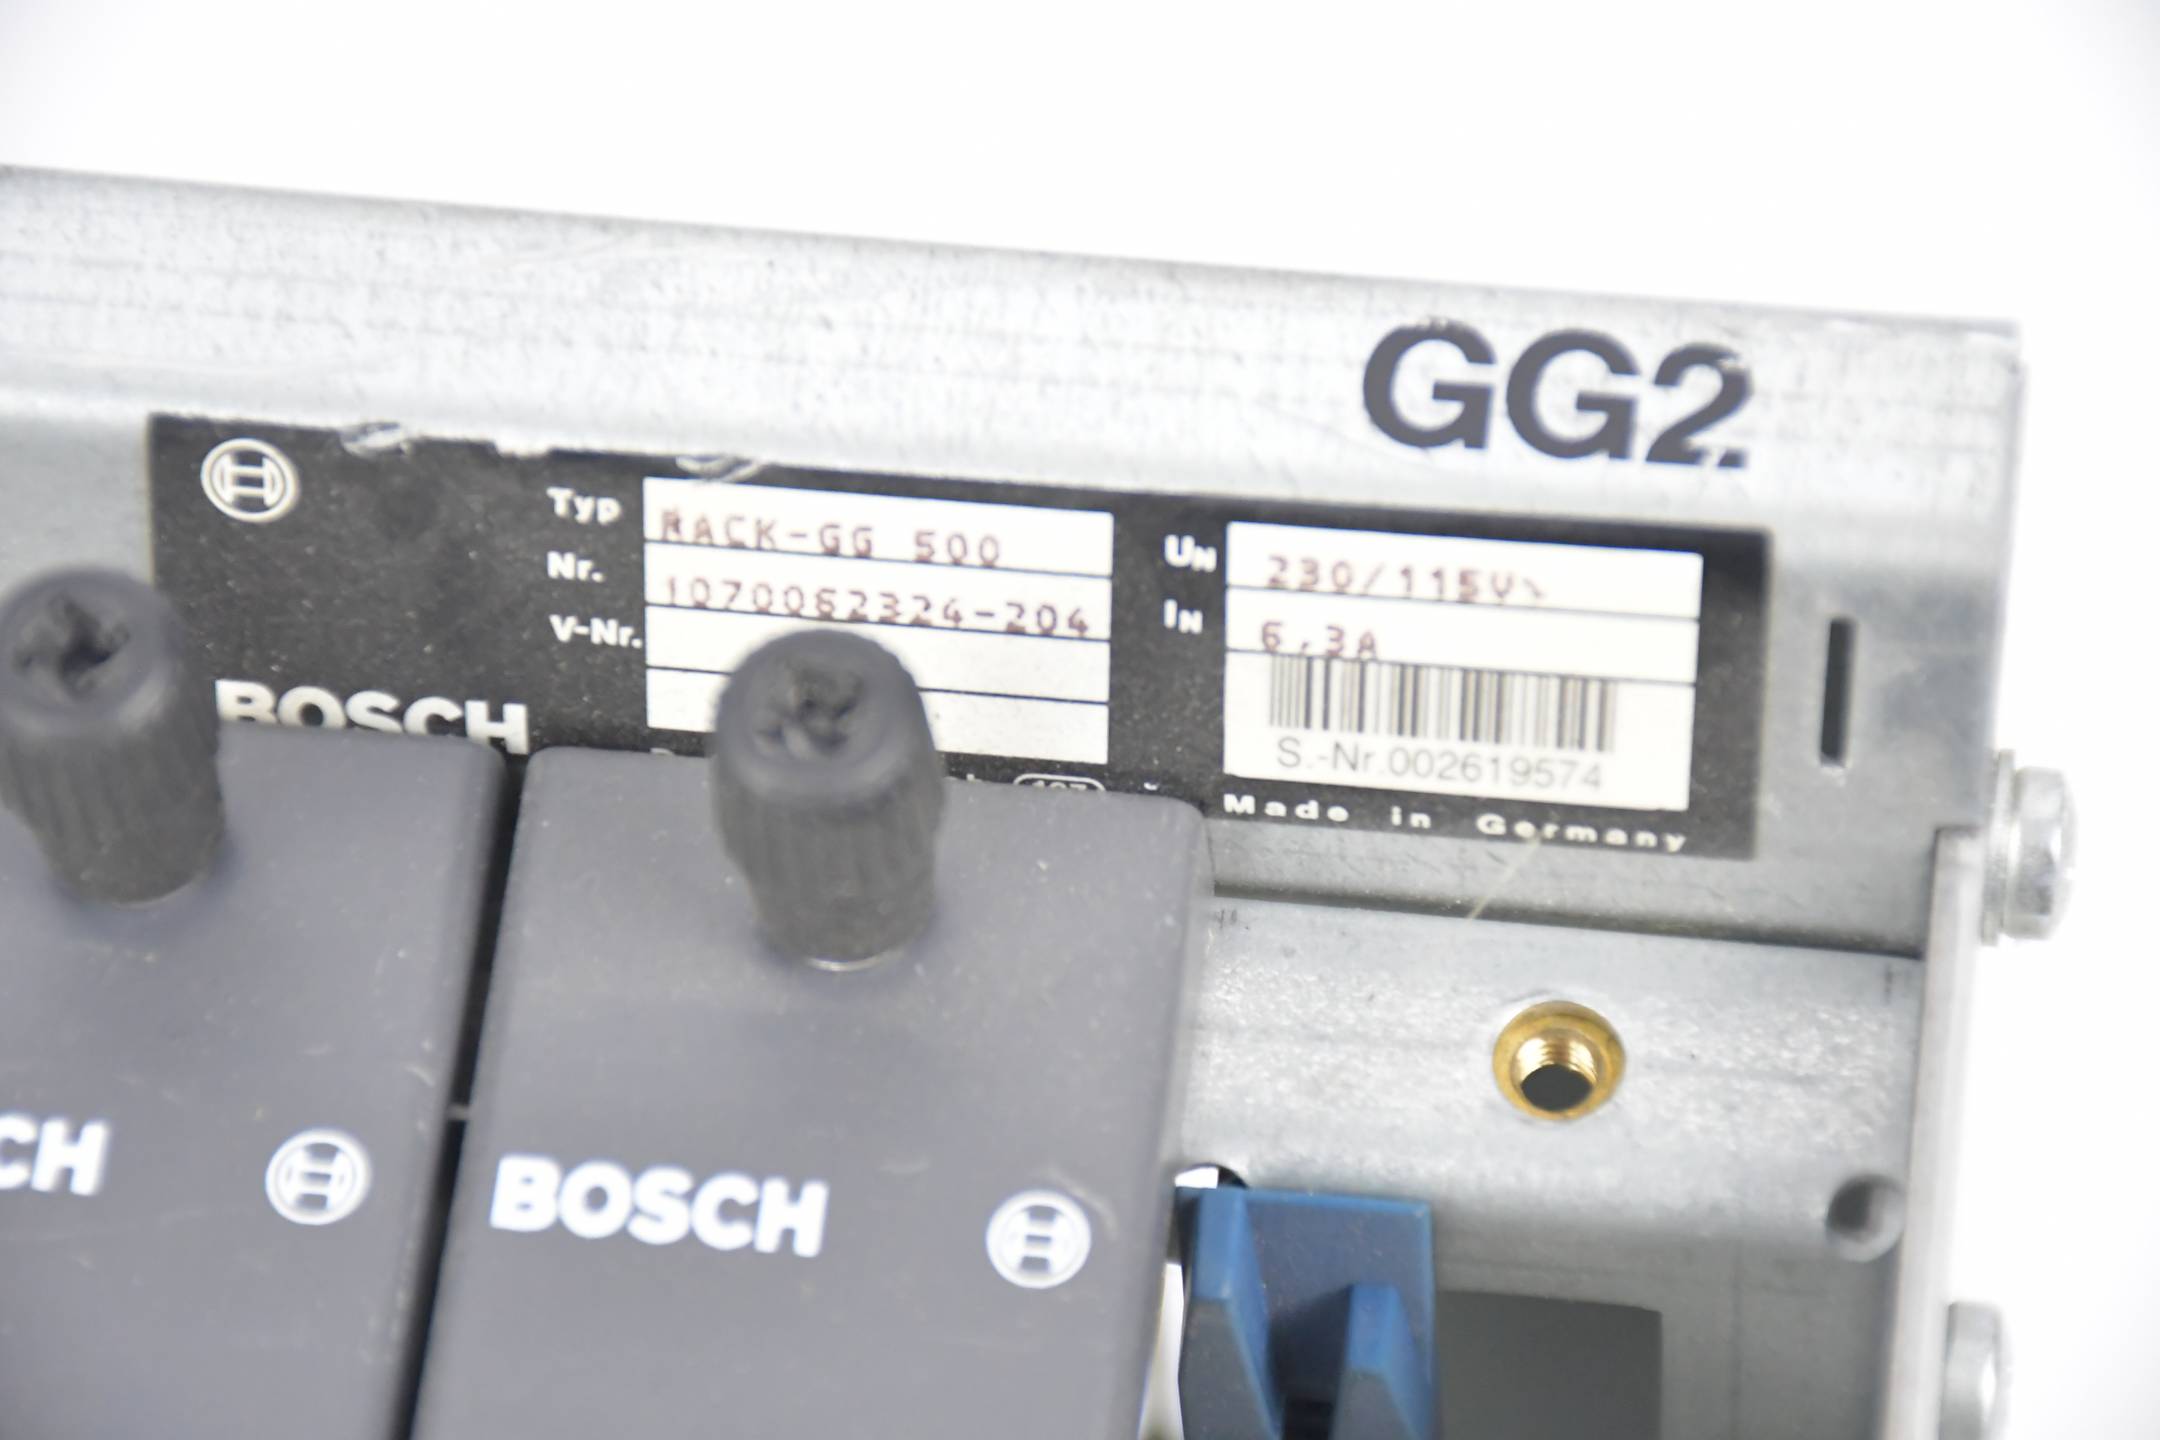 Bosch Rack-GG 500 ( 1070062324-204 )